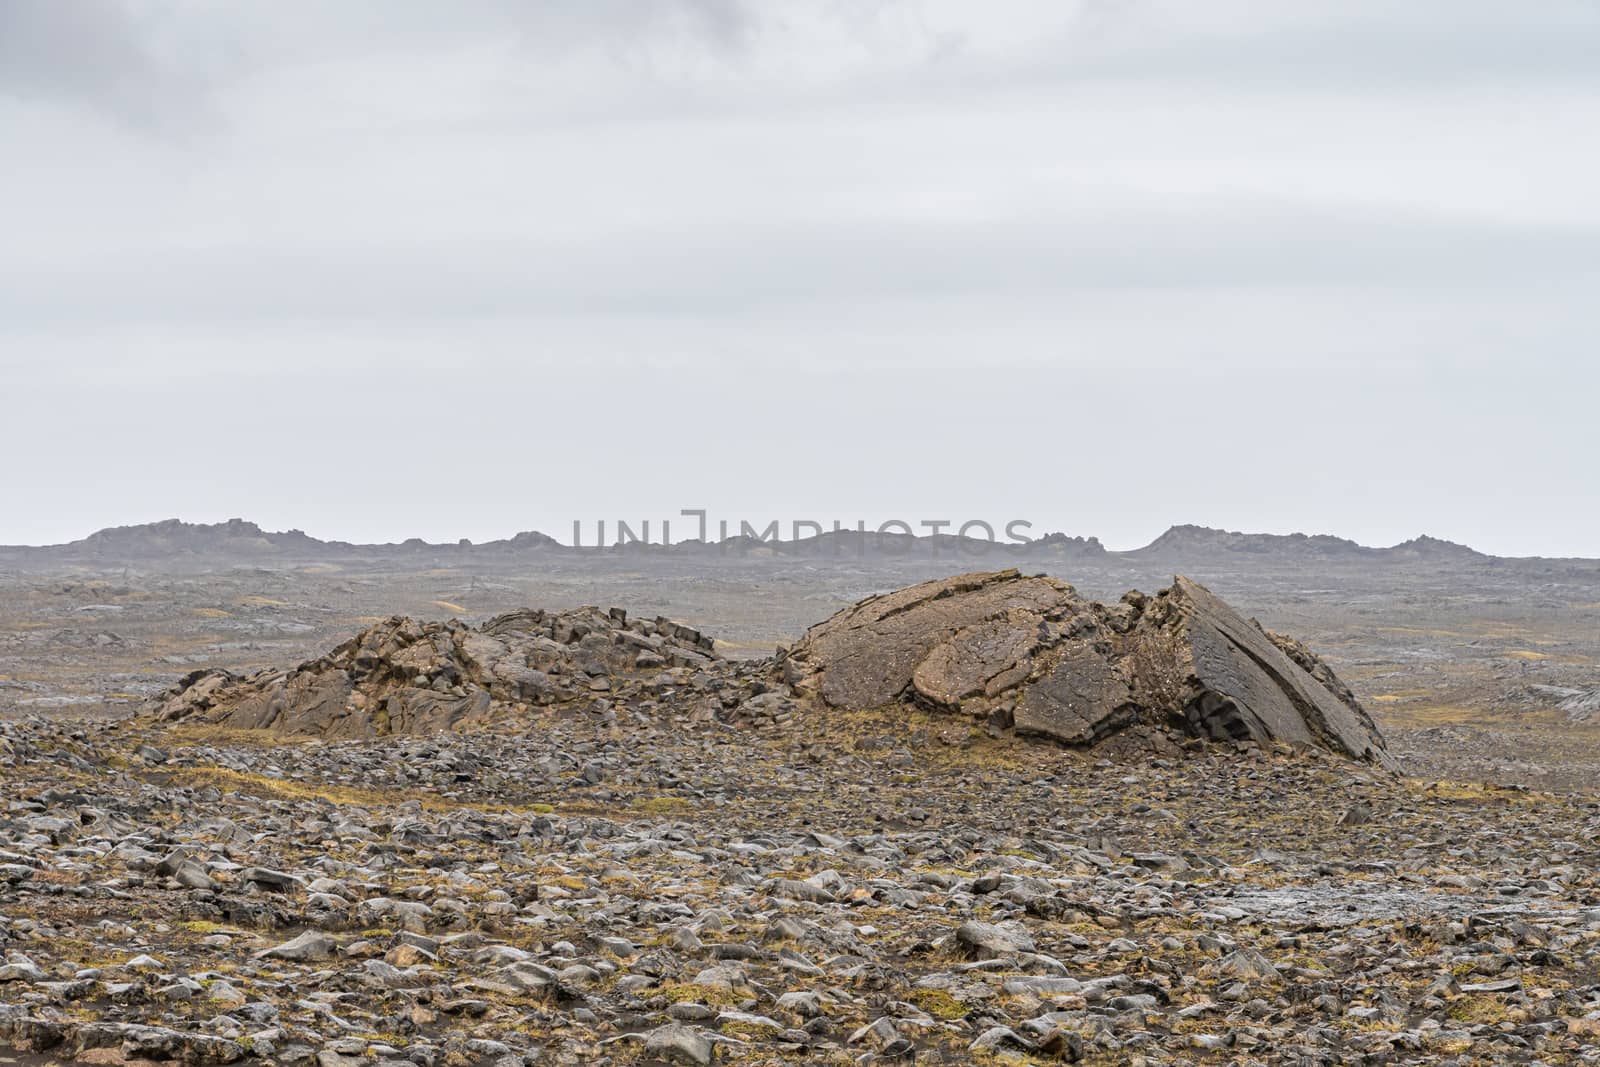 Bridge between continents in Iceland volcanic rock pushing up breaking apart